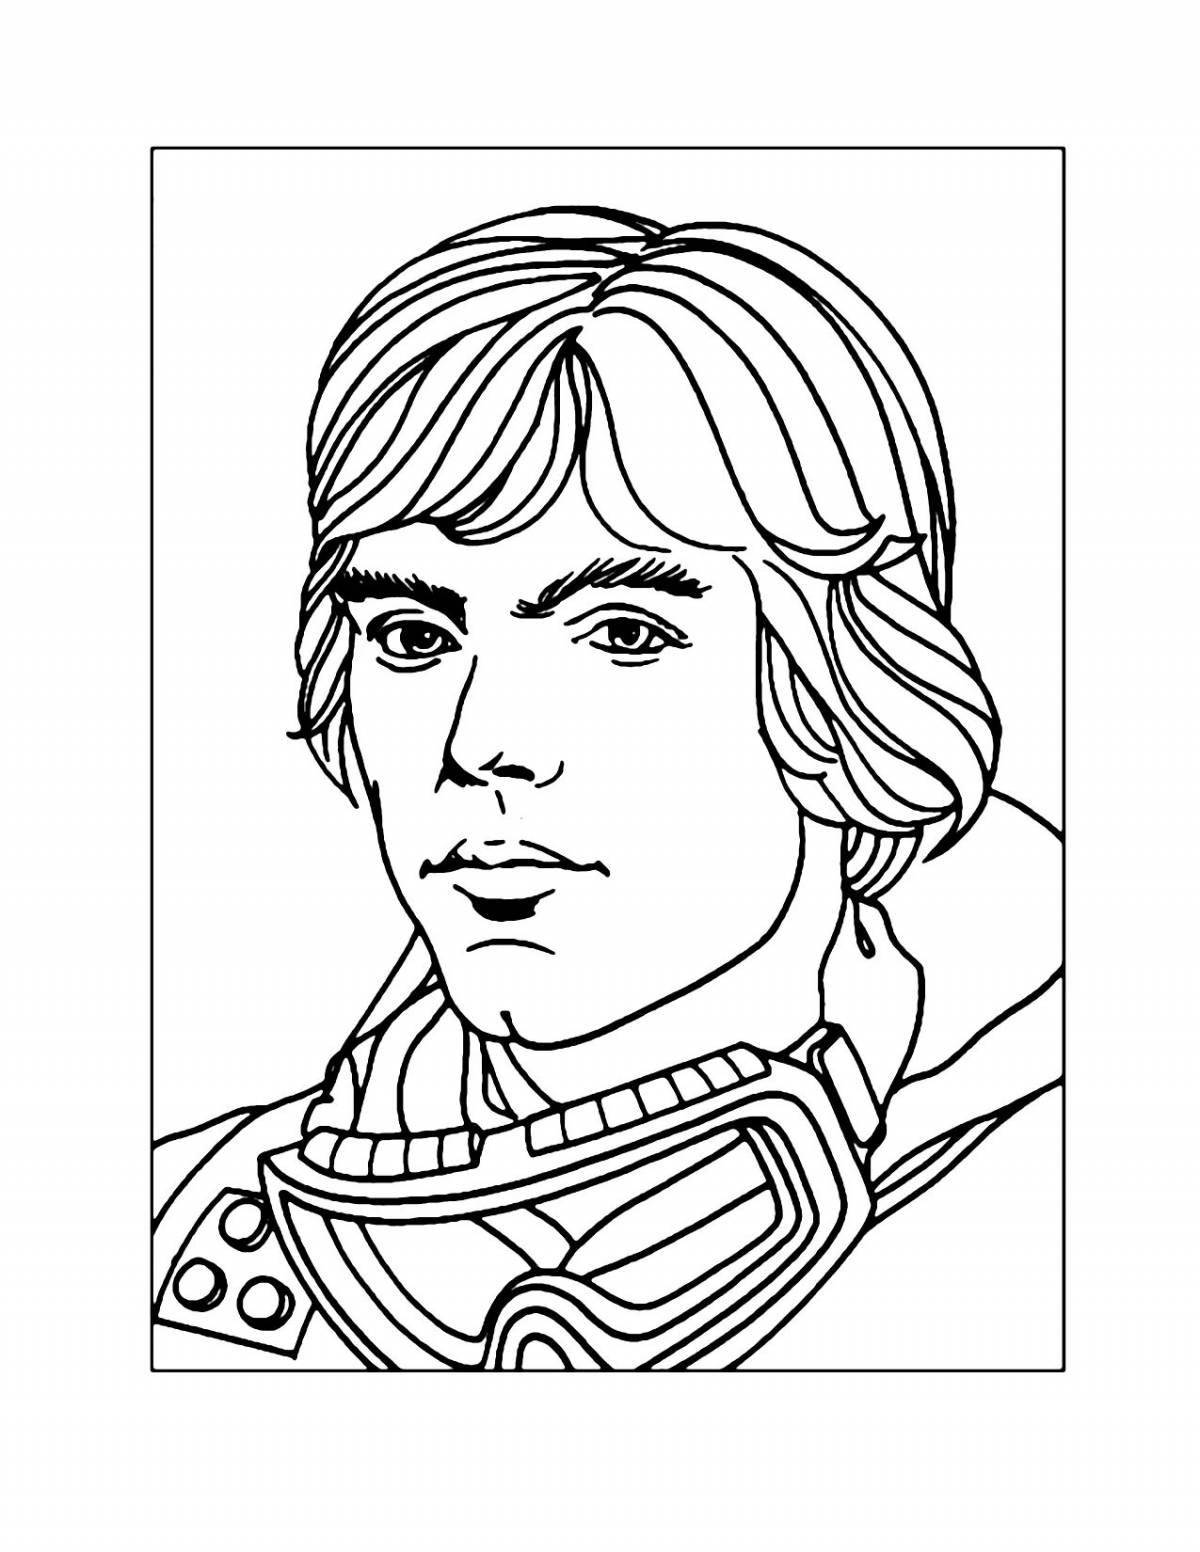 Luke Skywalker's fun coloring book